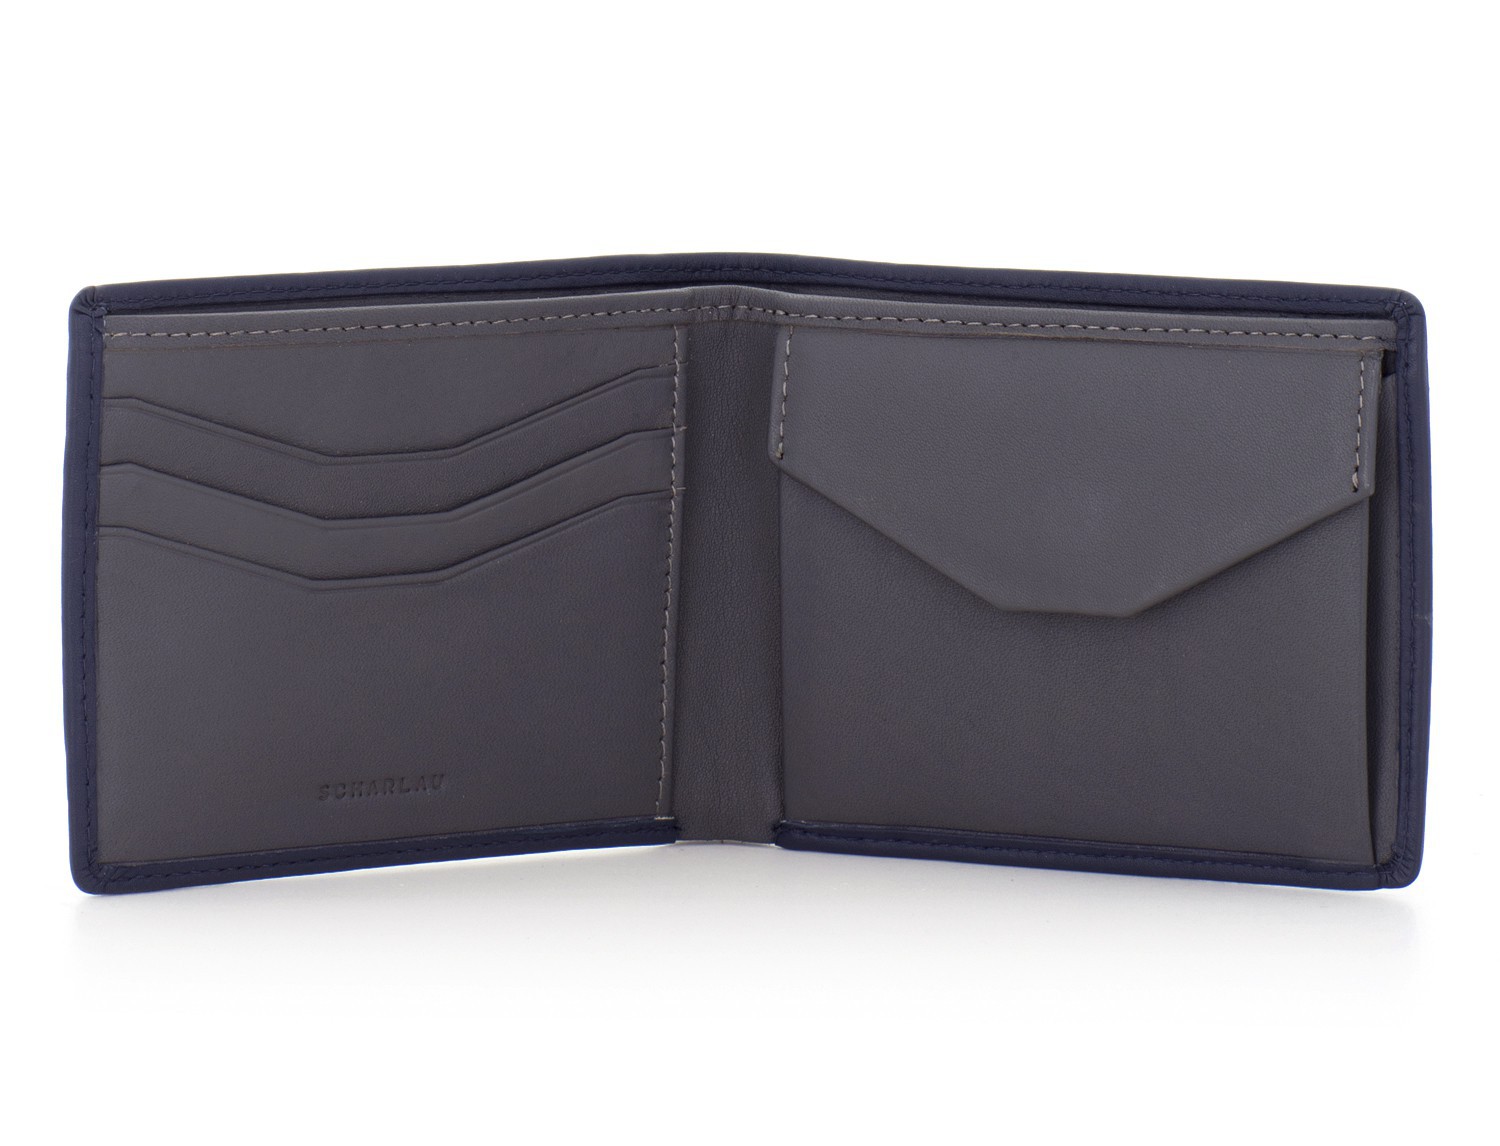 mini leather wallet for men black open